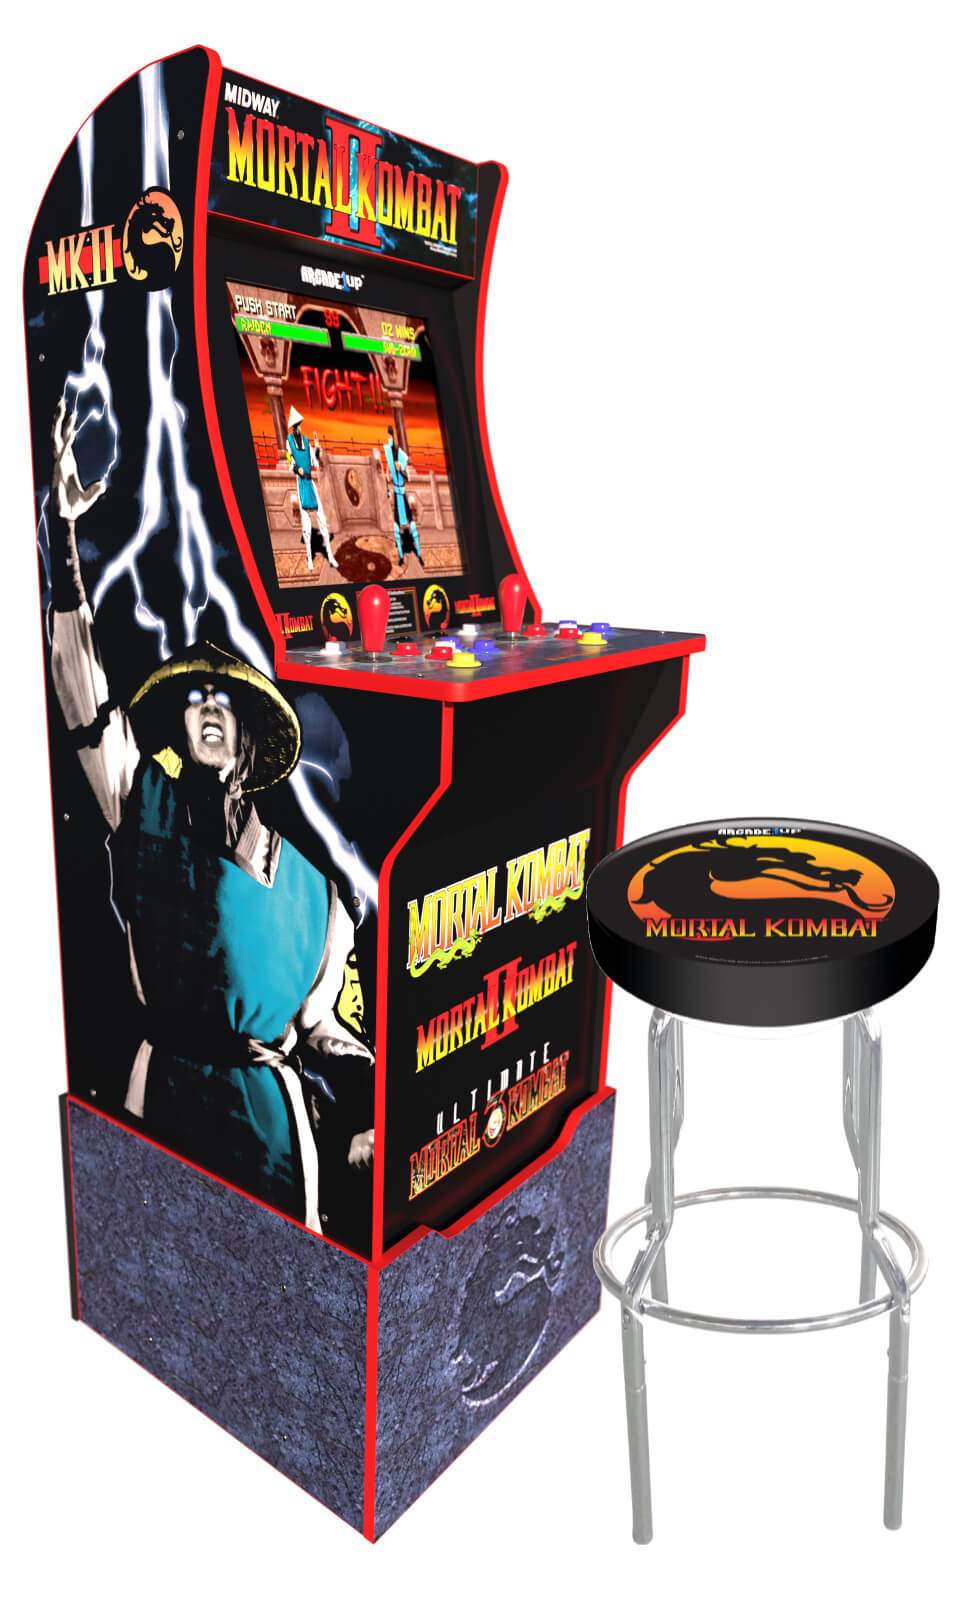 Mortal Kombat Arcade Cabinet Venue